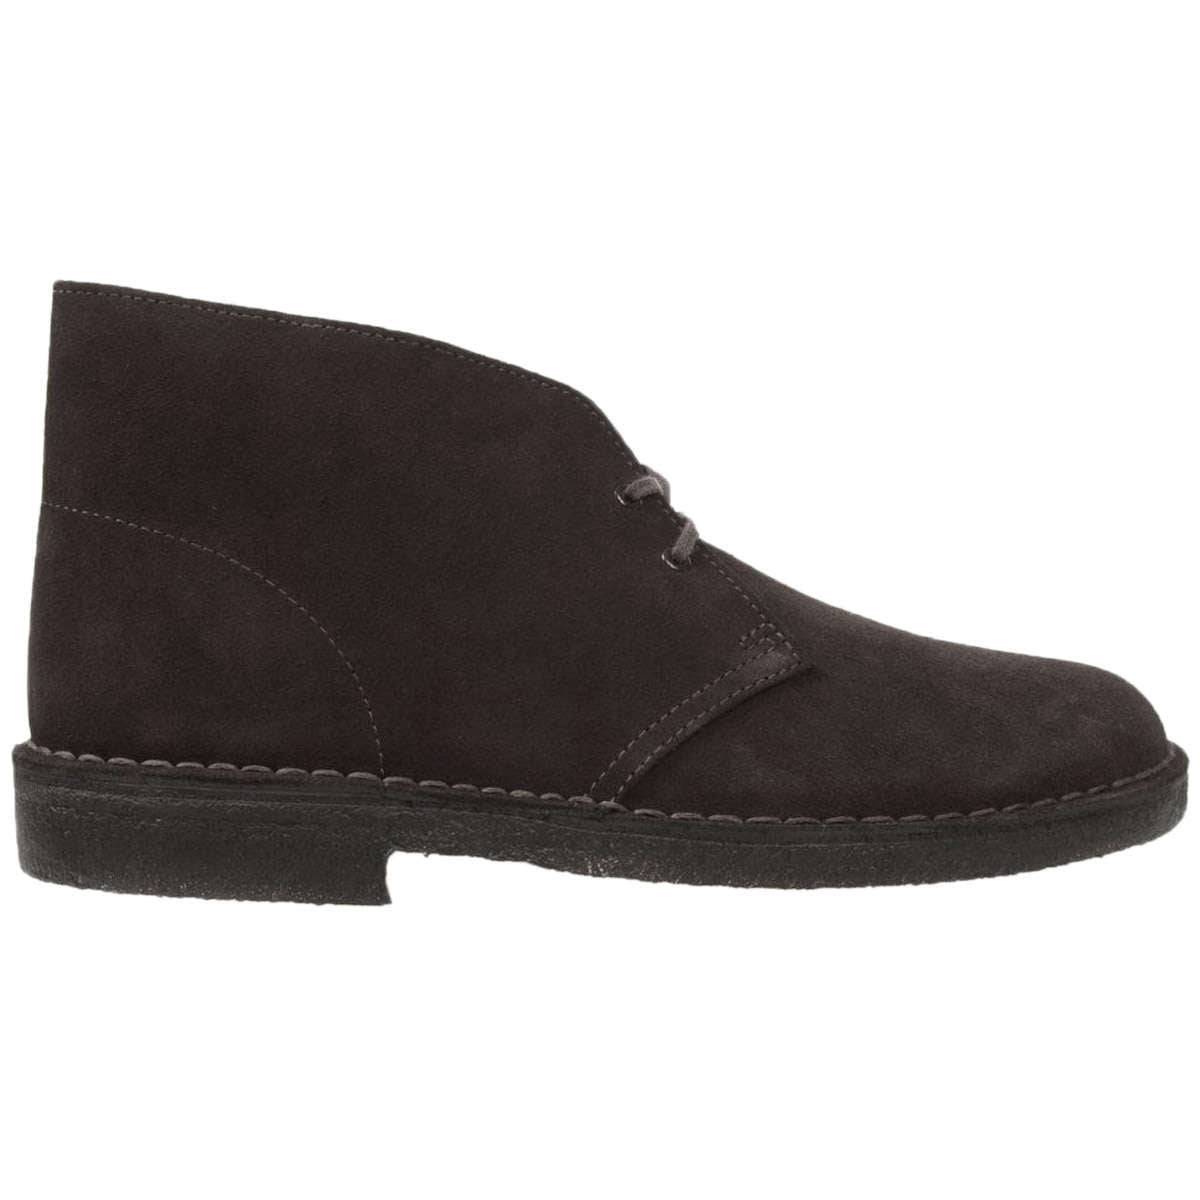 Clarks Originals Desert Boot Suede Leather Men's Boots#color_brown